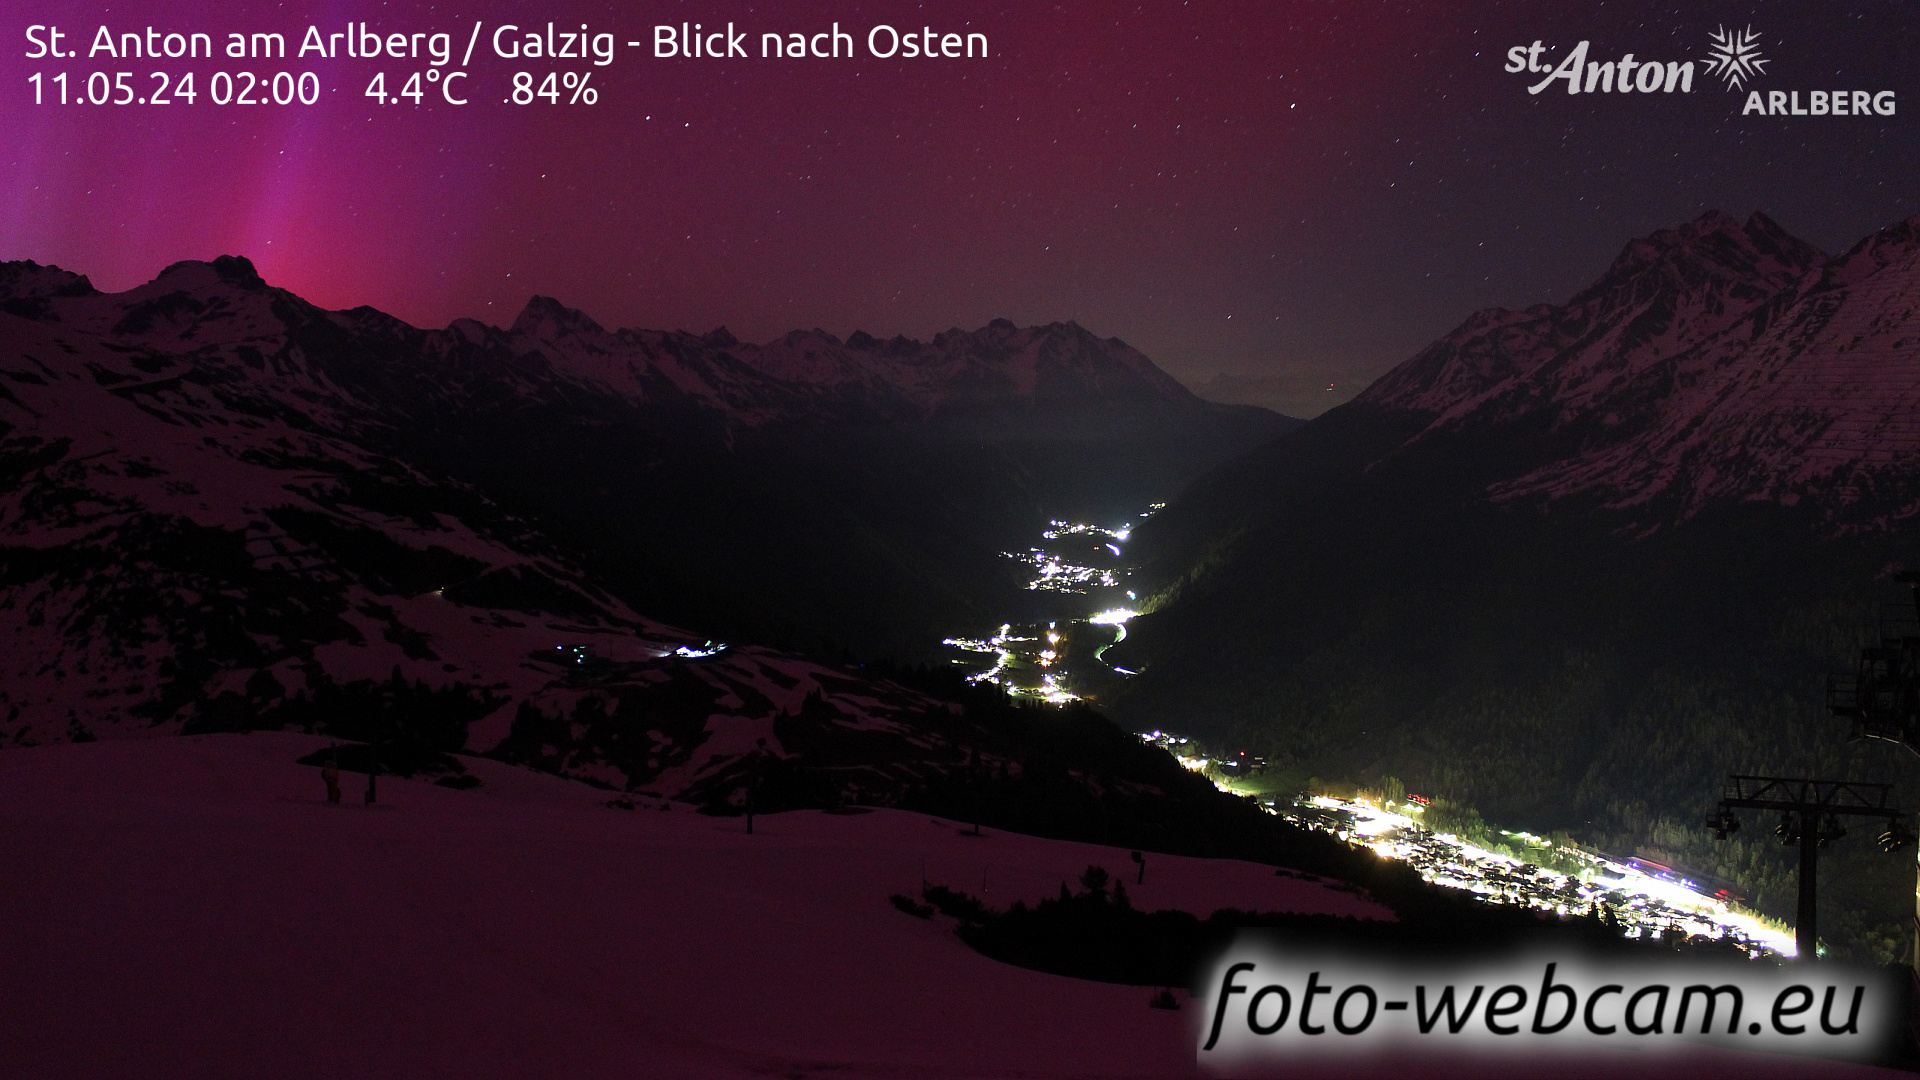 St. Anton am Arlberg Lun. 02:01